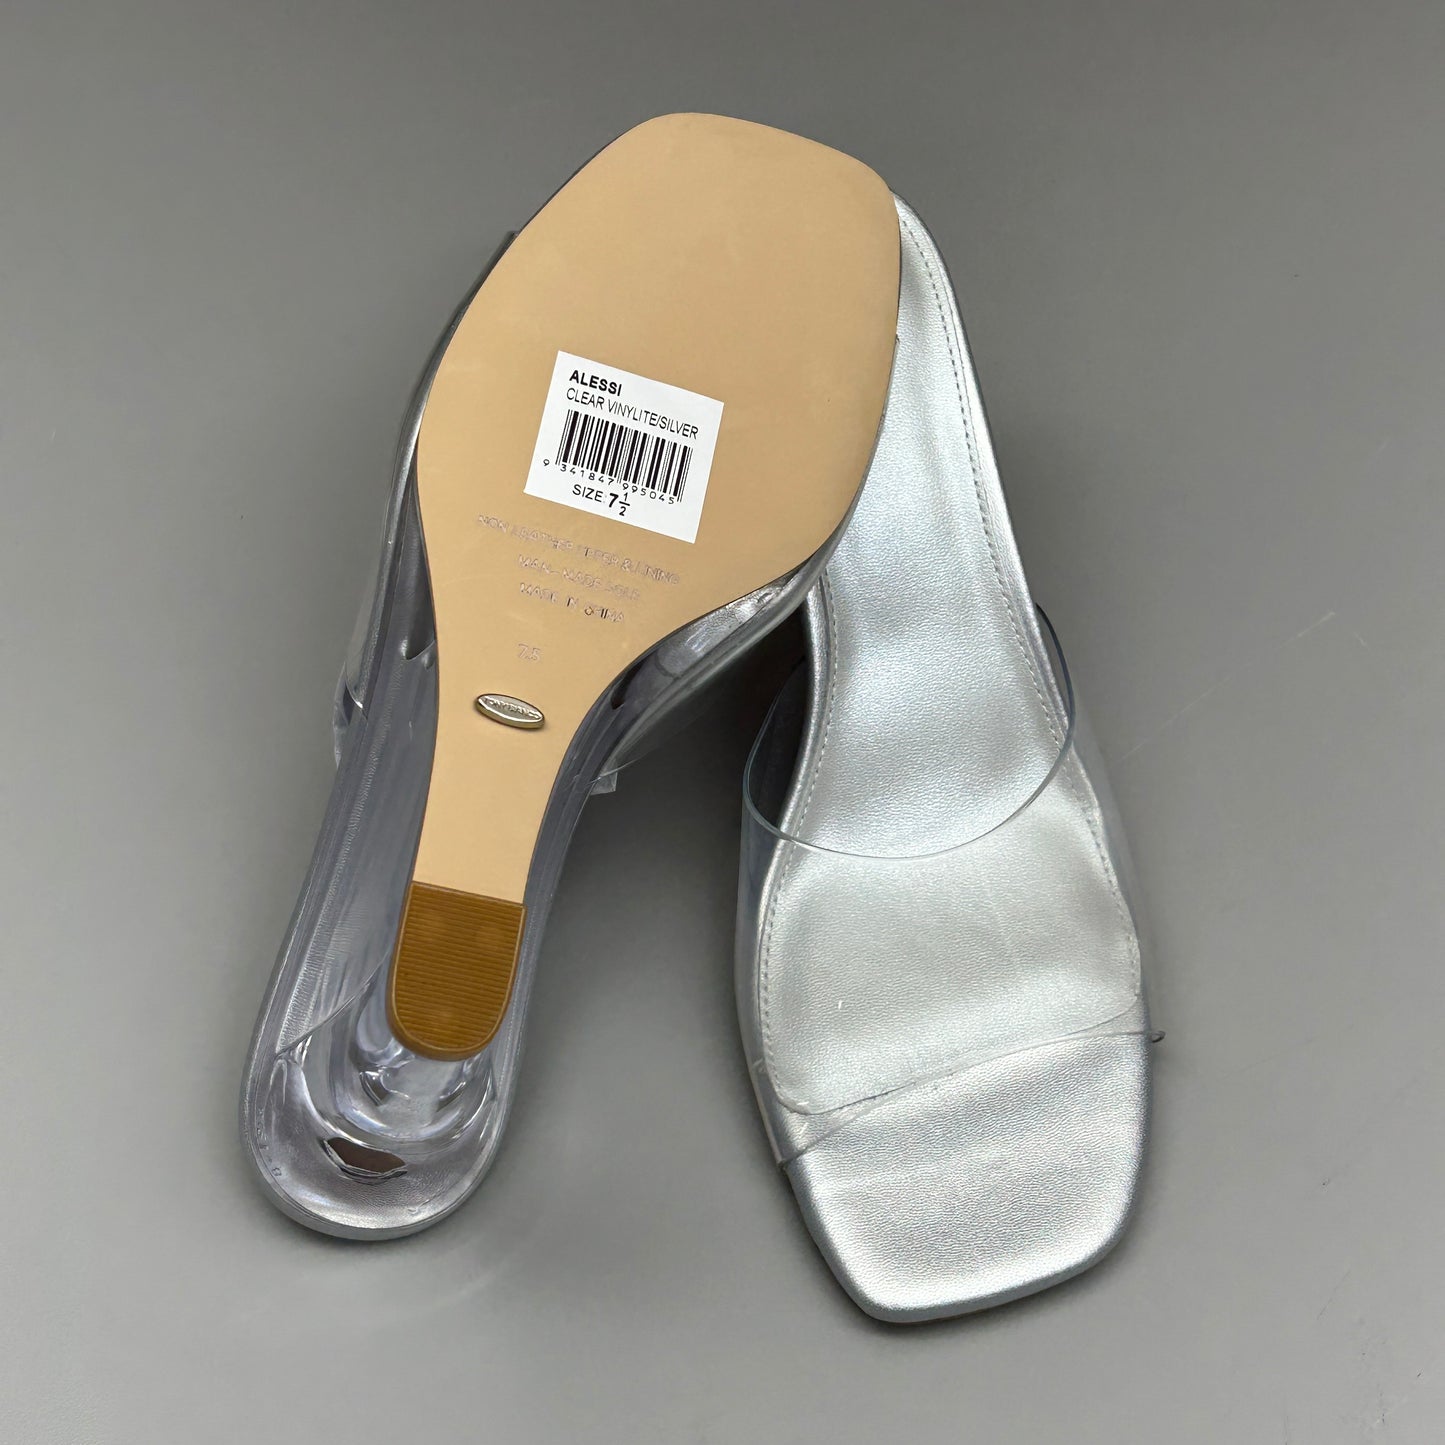 TONY BIANCO Alessi Clear Vinylite/Silver Wedges Women's Heels Sz 7.5 (New)